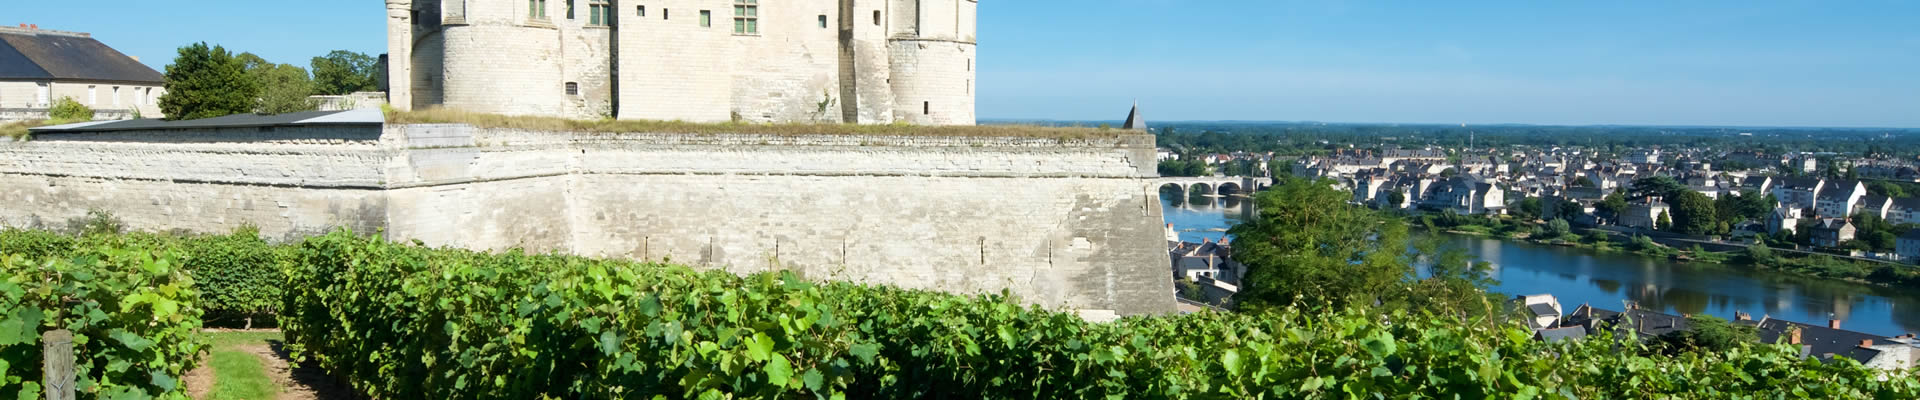 Loire valley vineyards